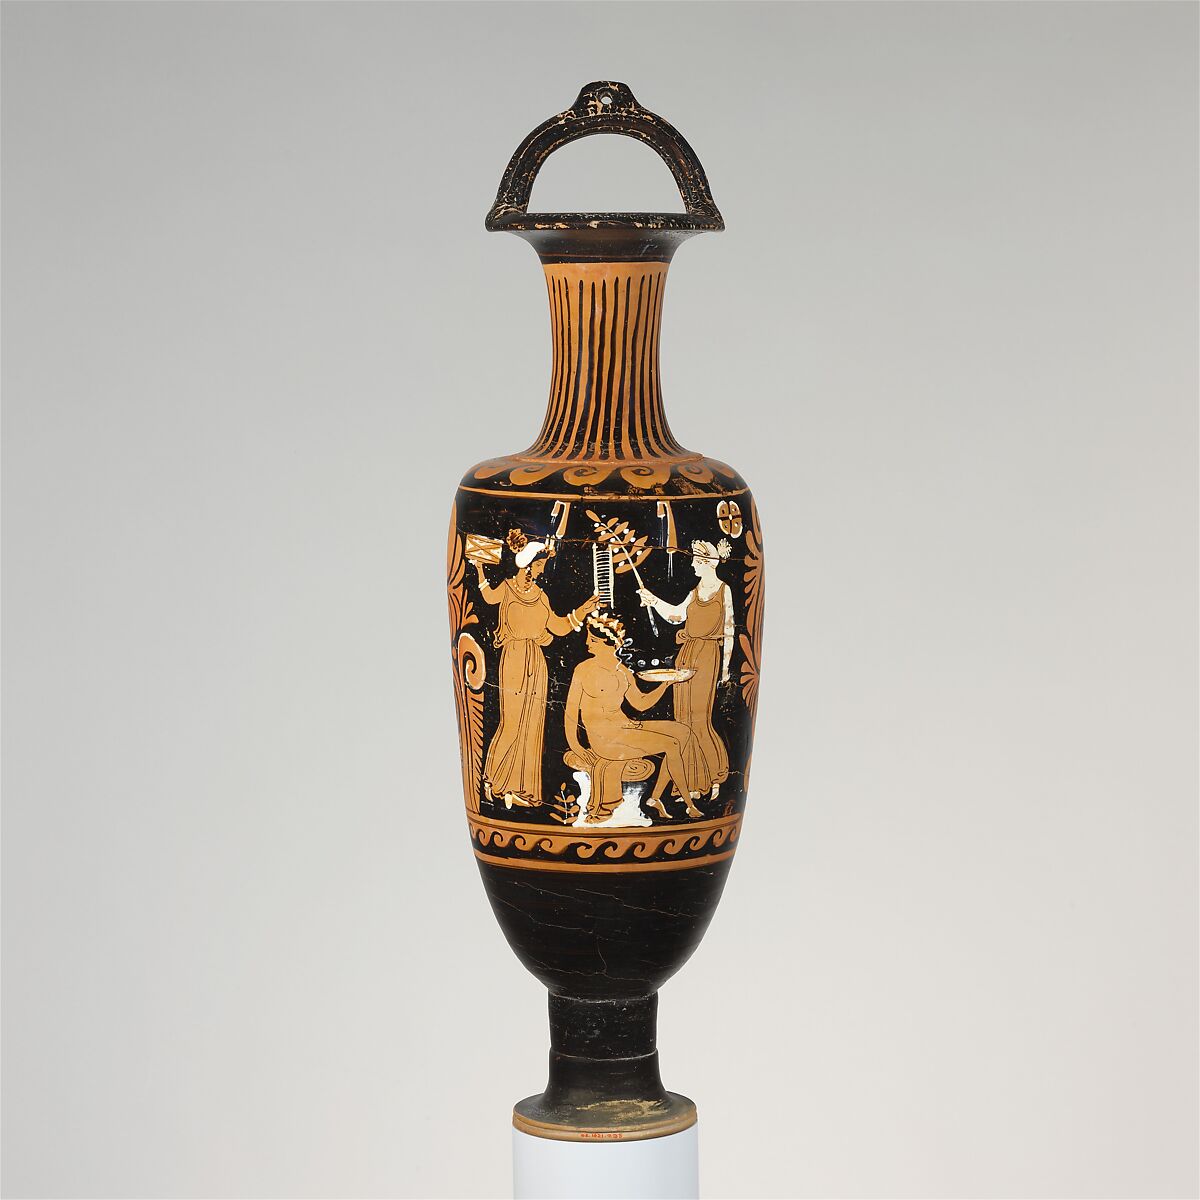 Terracotta bail-amphora (jar), Attributed to the APZ Painter, Terracotta, Greek, South Italian, Campanian 